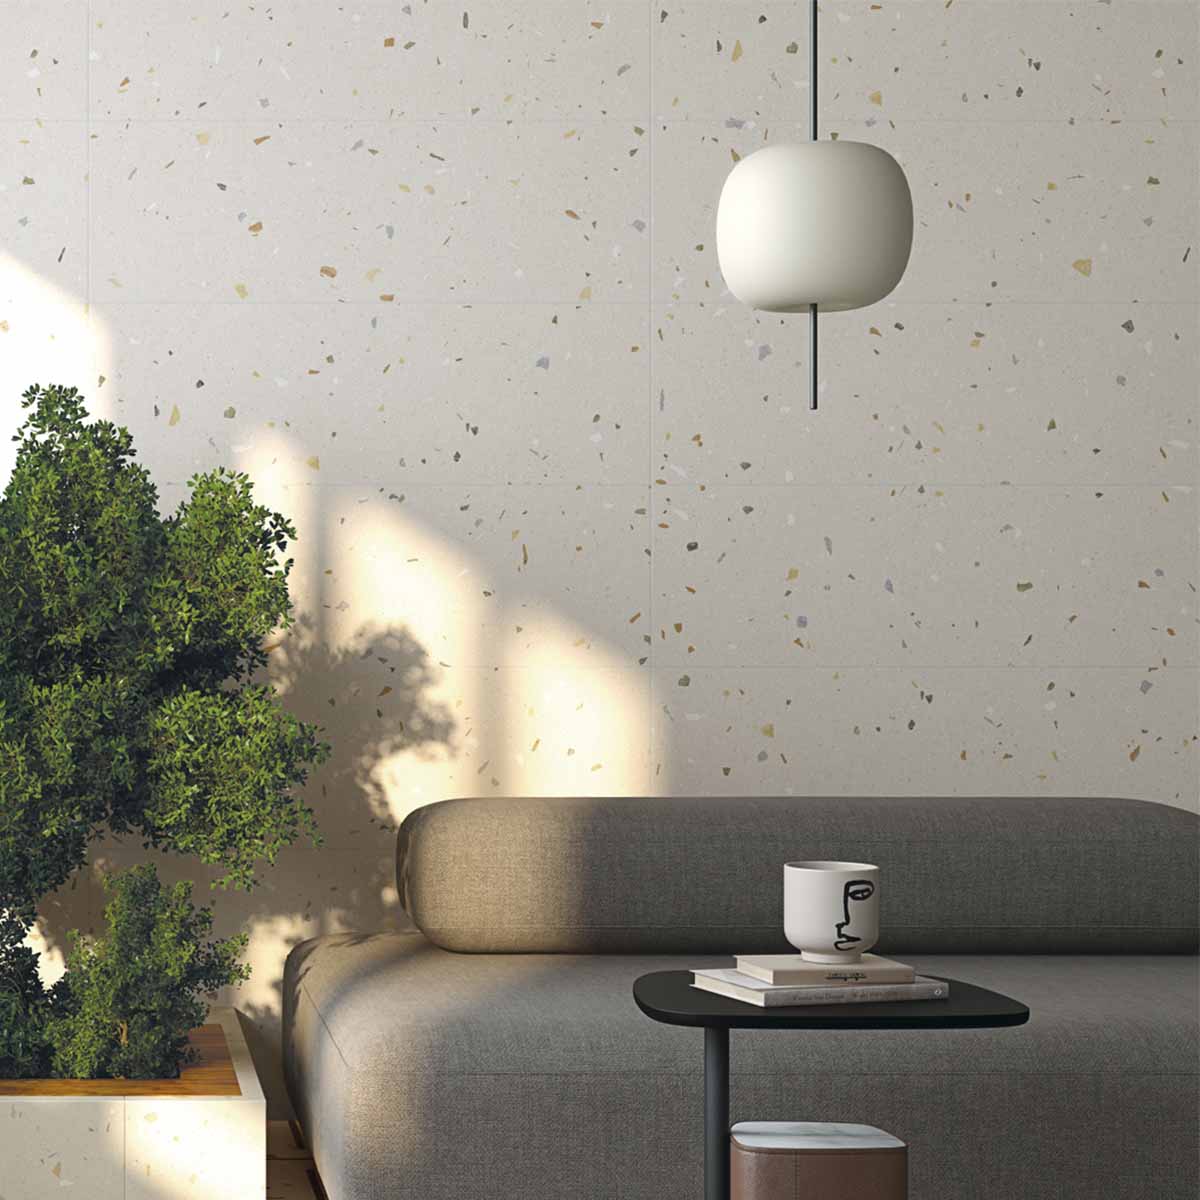 arcana croccante-r topping tutti-frutti ceramic wall tile 32x99cm lifestyle deluxe bathrooms ireland